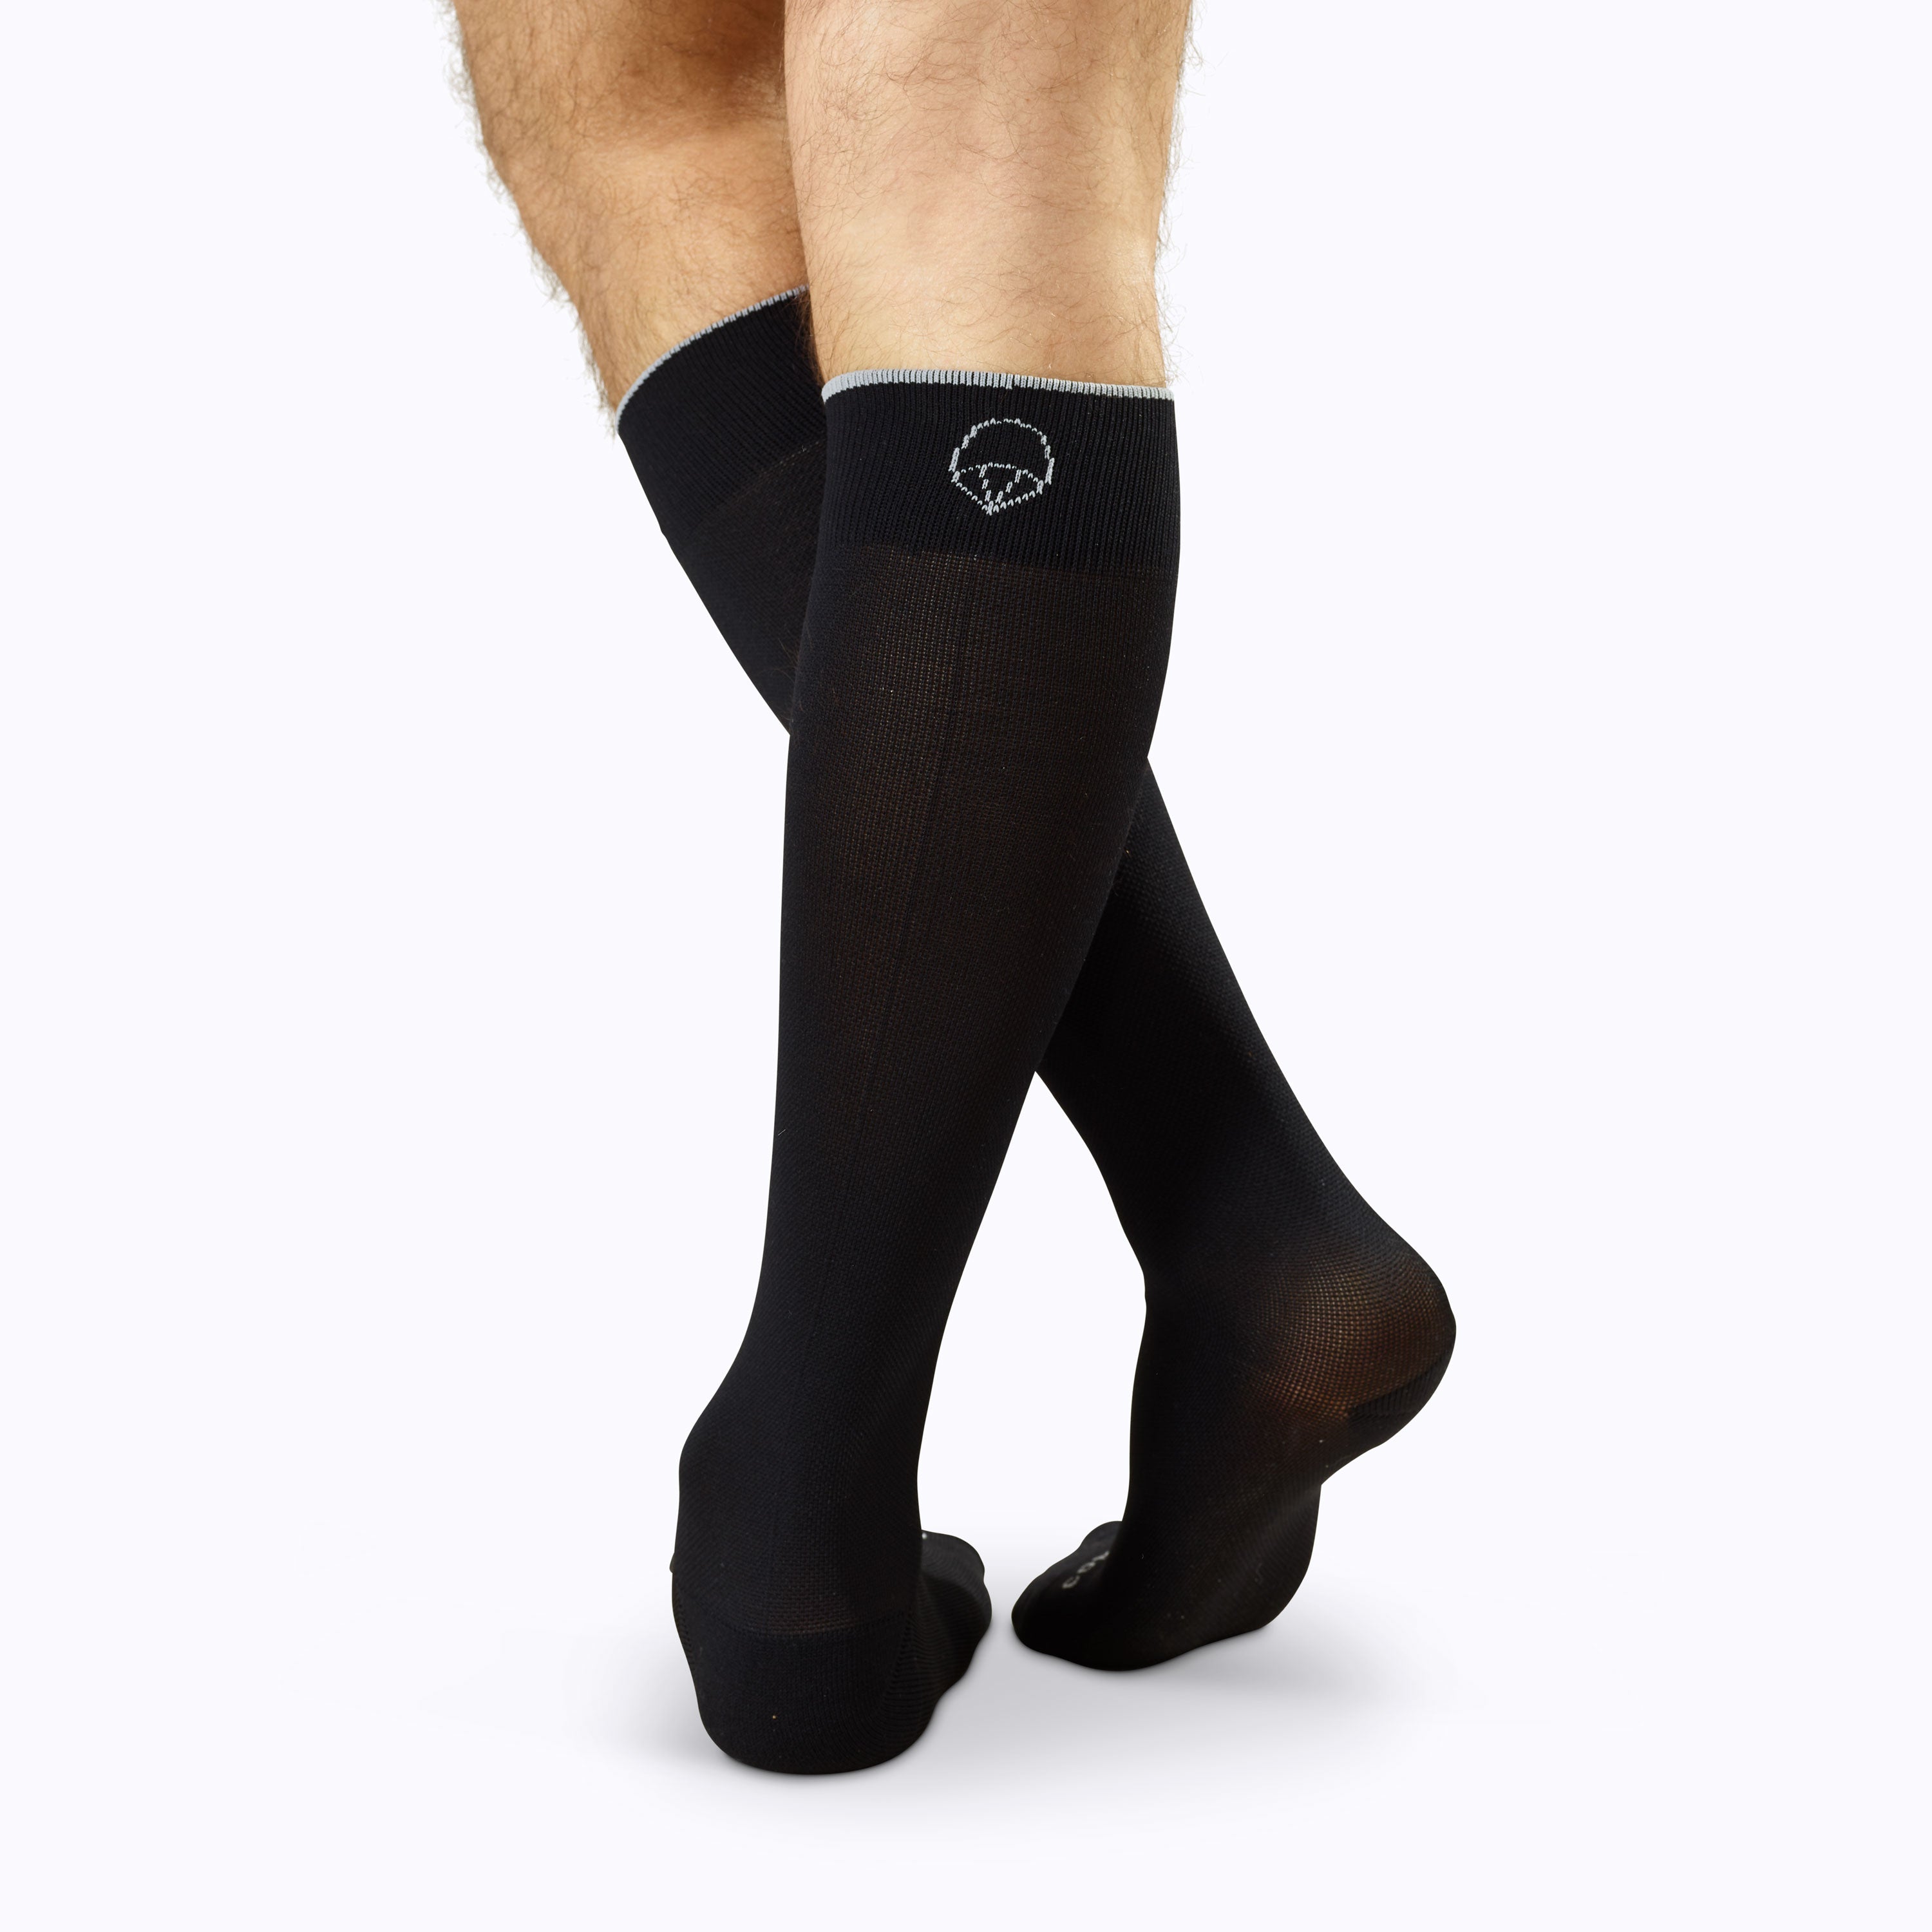 Comrad Solids Knee High Socks - 20-30 mmHg